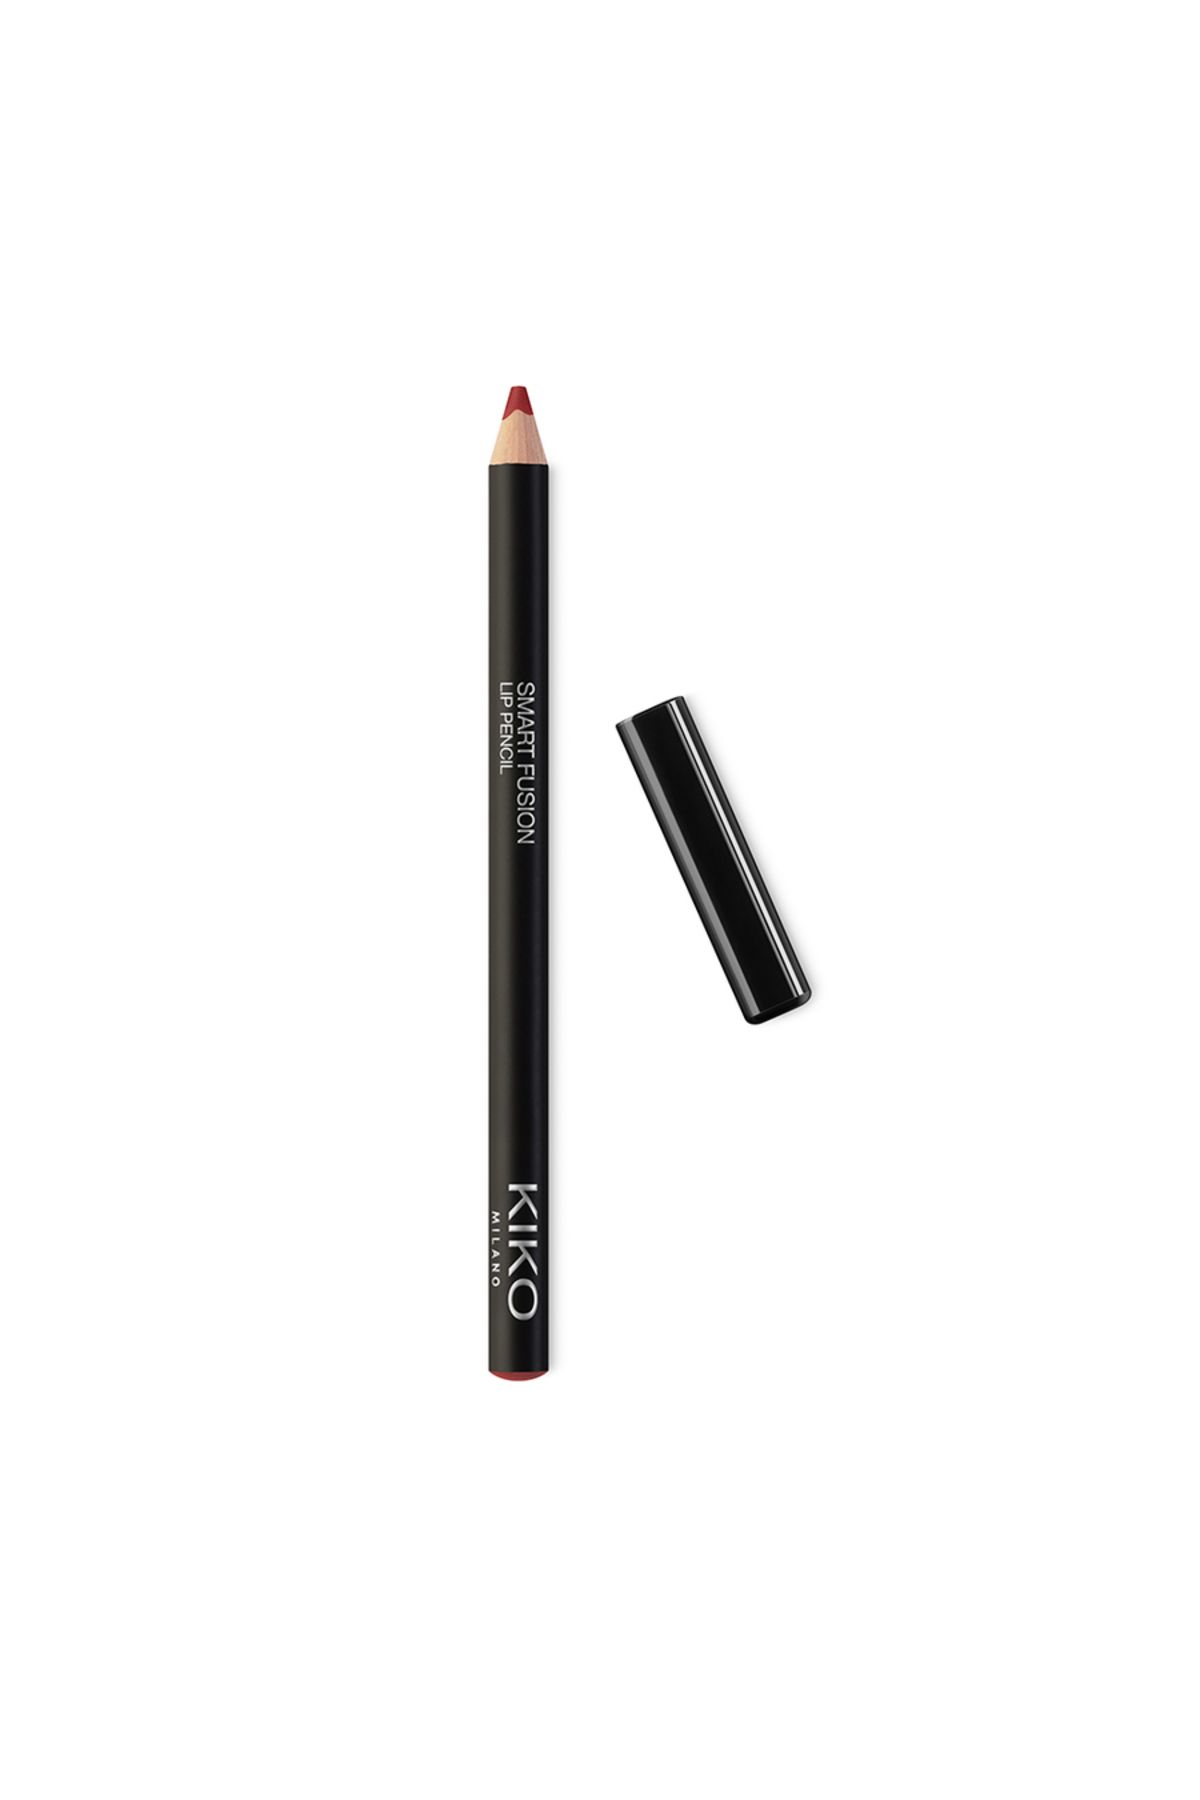 KIKO DUDAK KALEMİ - Smart Fusion Lip Pencil - 535 Scarlet Red